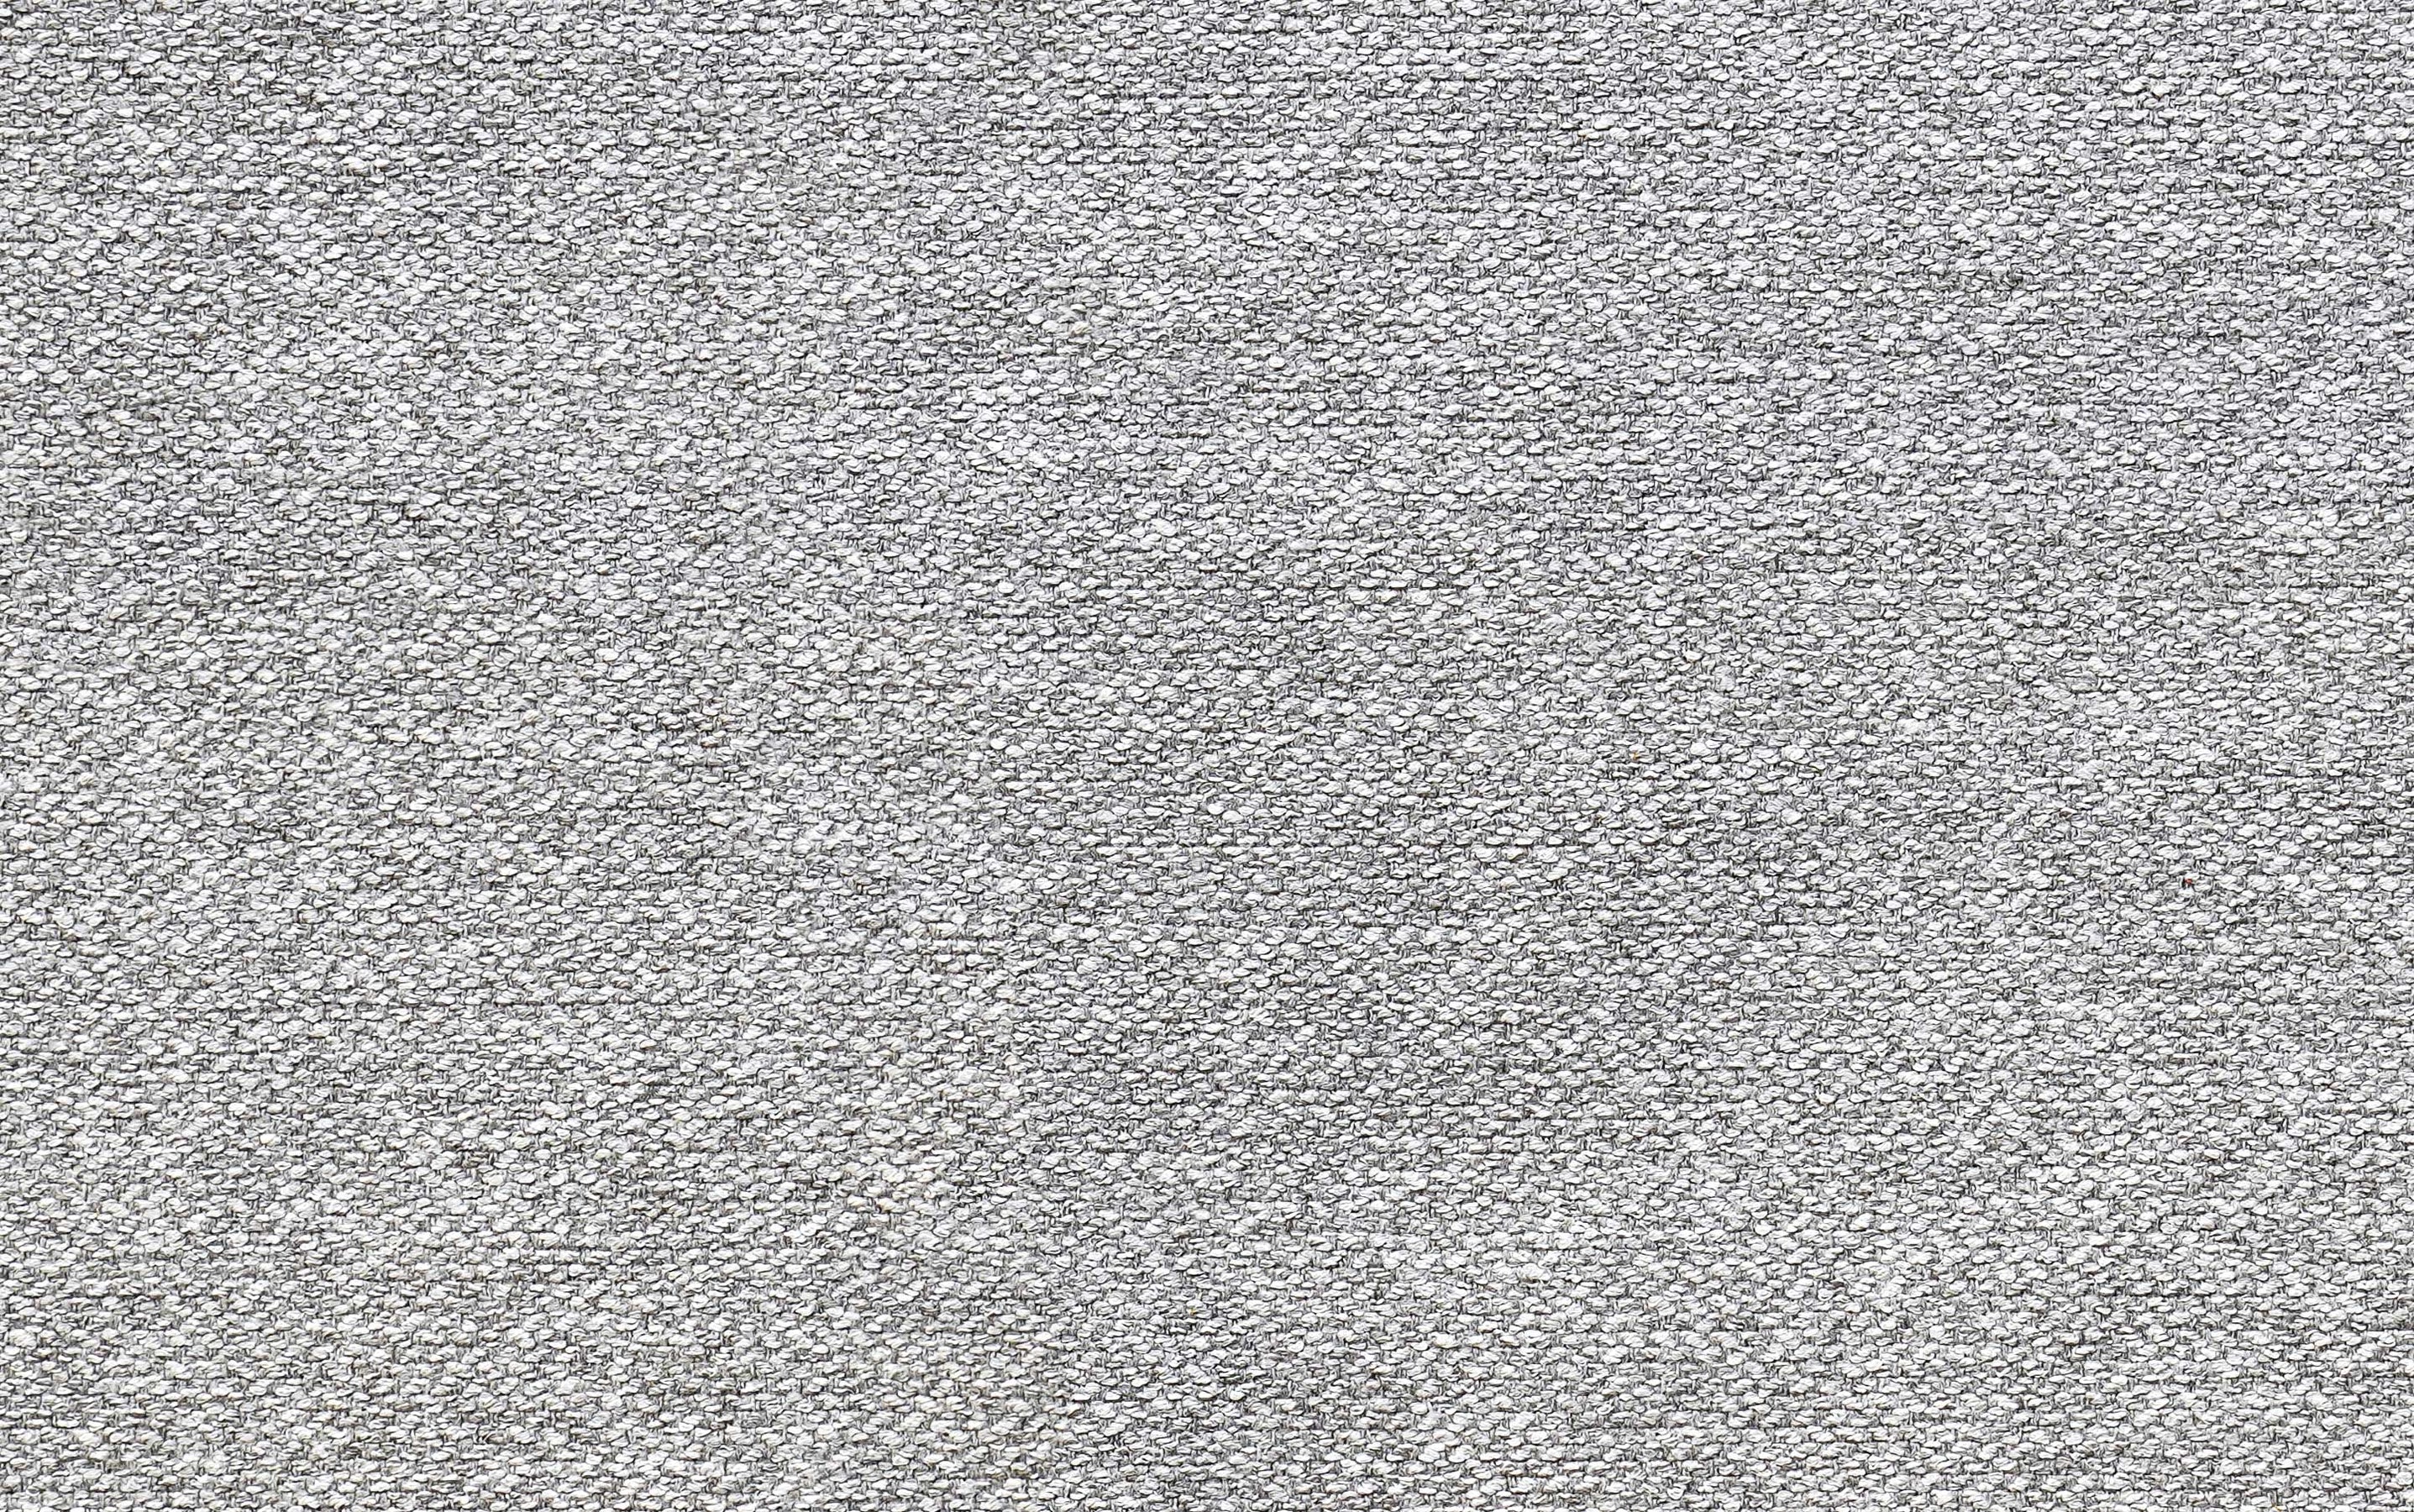 Mist Grey Woven Polyester Fabric | Morrison Large Rectangular Ottoman